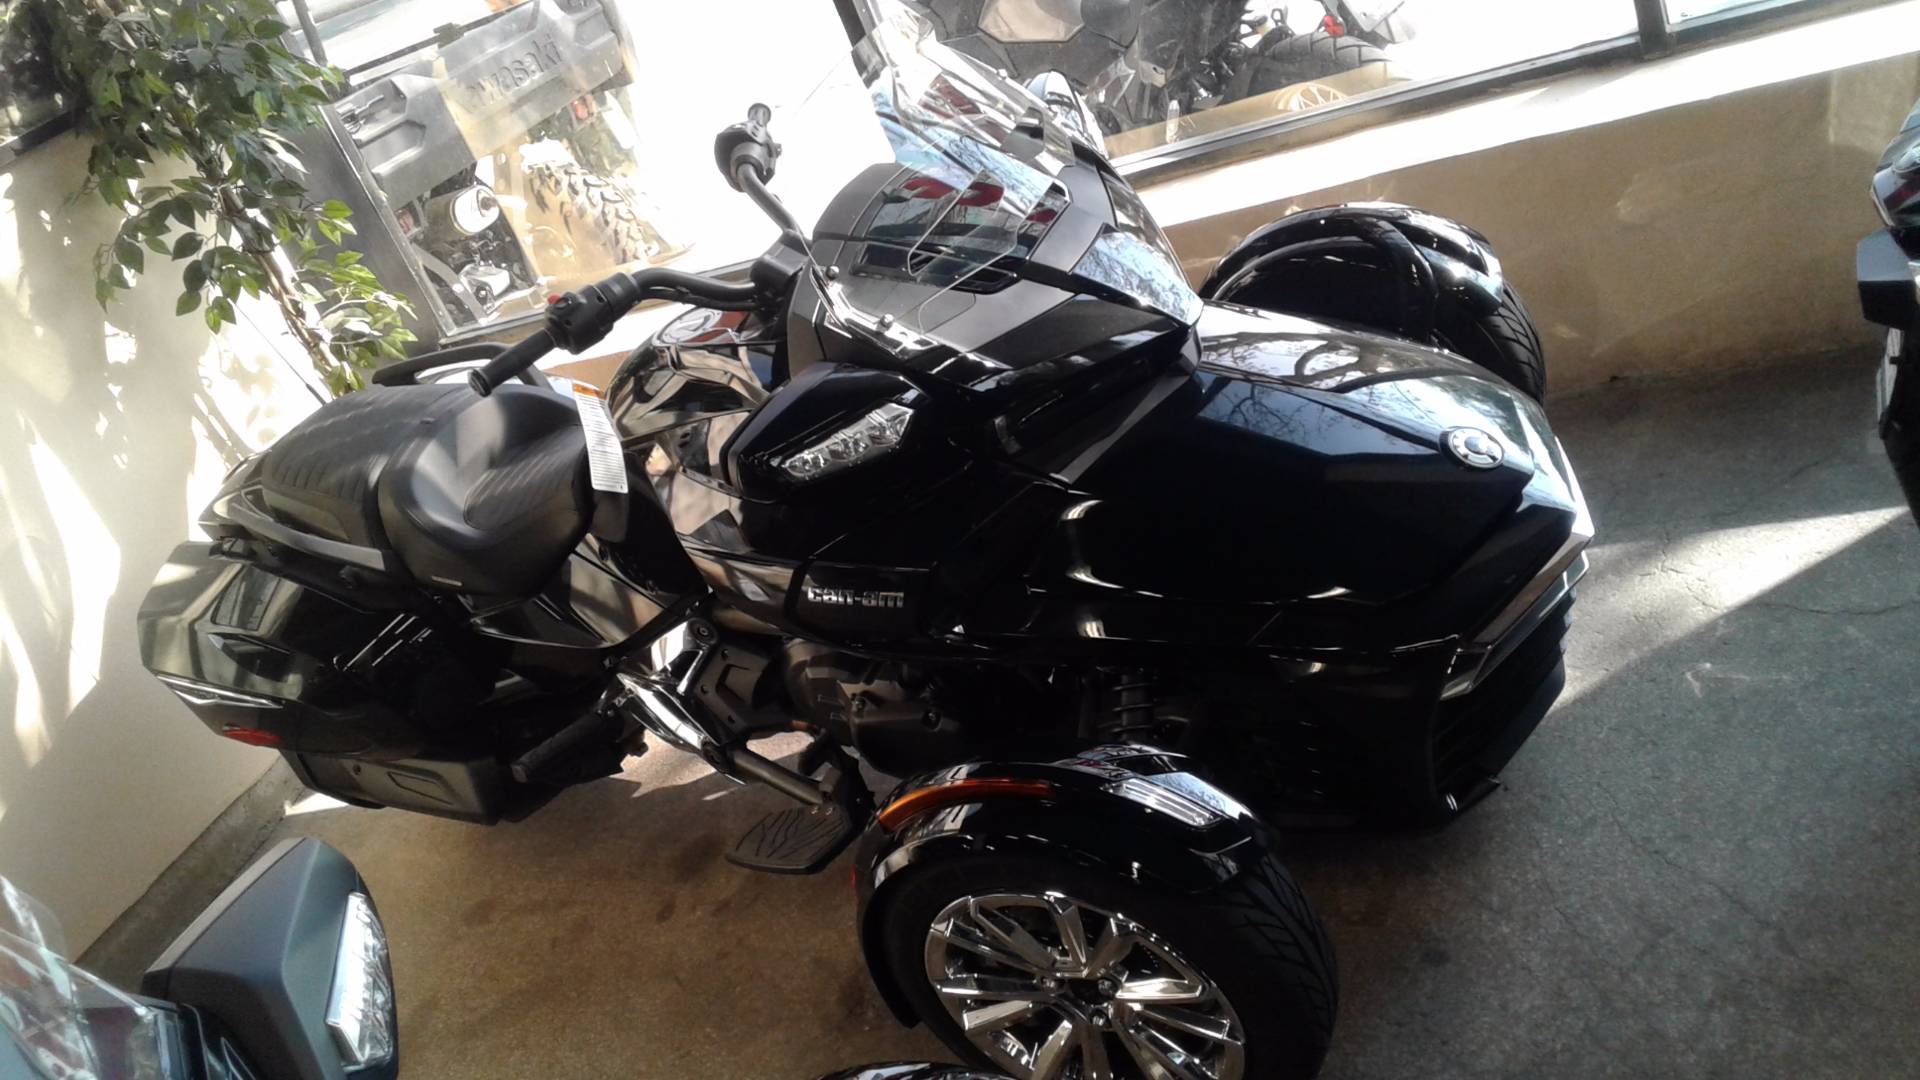 New 2016 Can Am Spyder F3 Limited Steel Black Metallic Motorcycles In Bakersfield Ca 003046